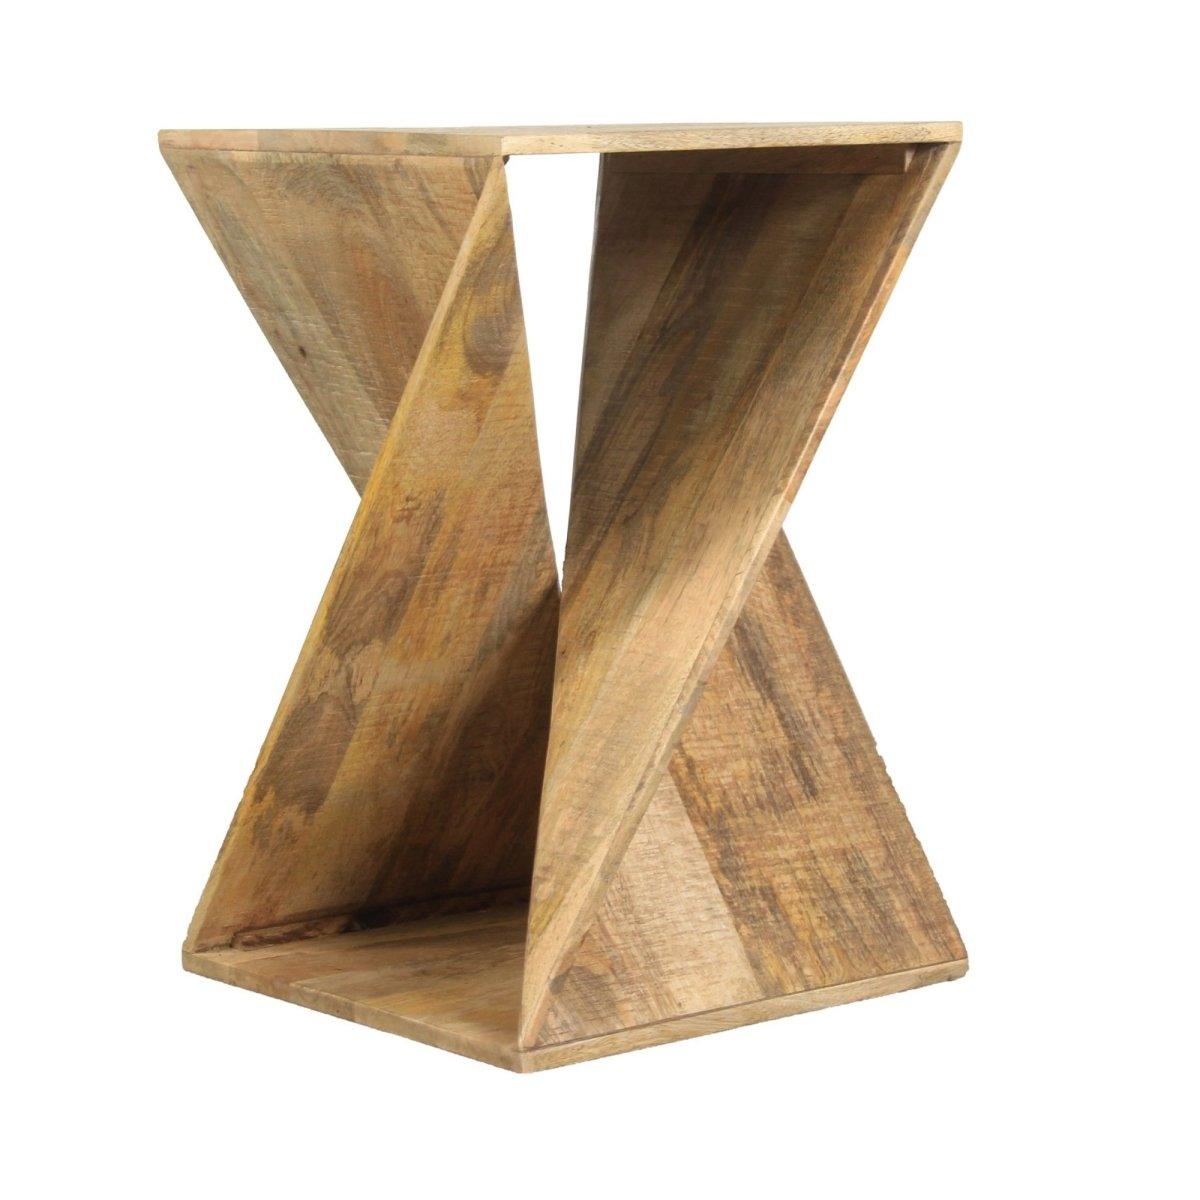 Felt Illusion Mango wood End Table - Rustic Furniture Outlet